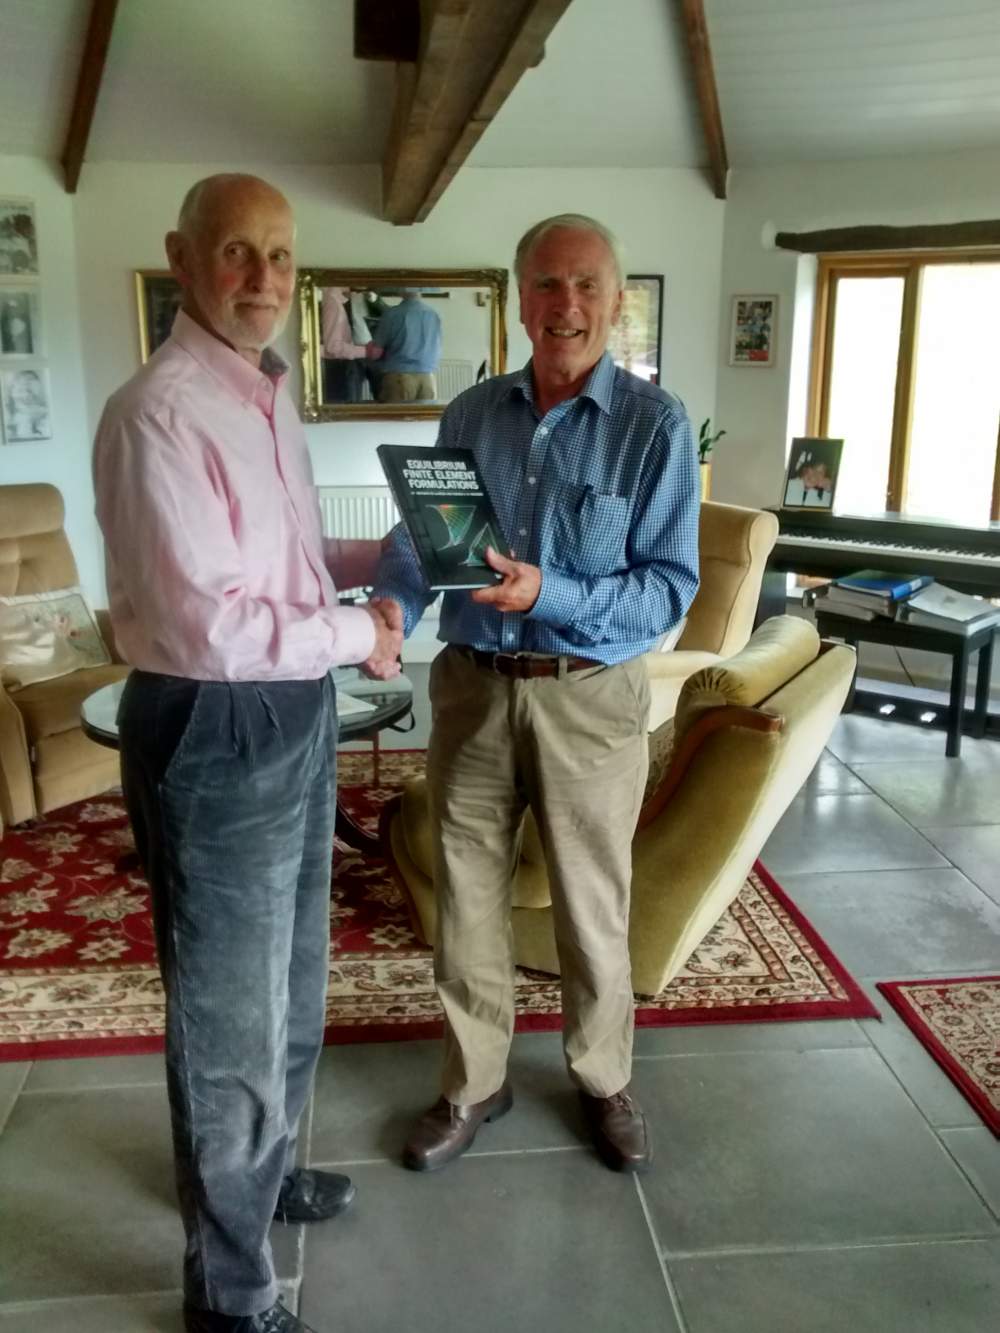 Edward Maunder presents his book to John Robinson